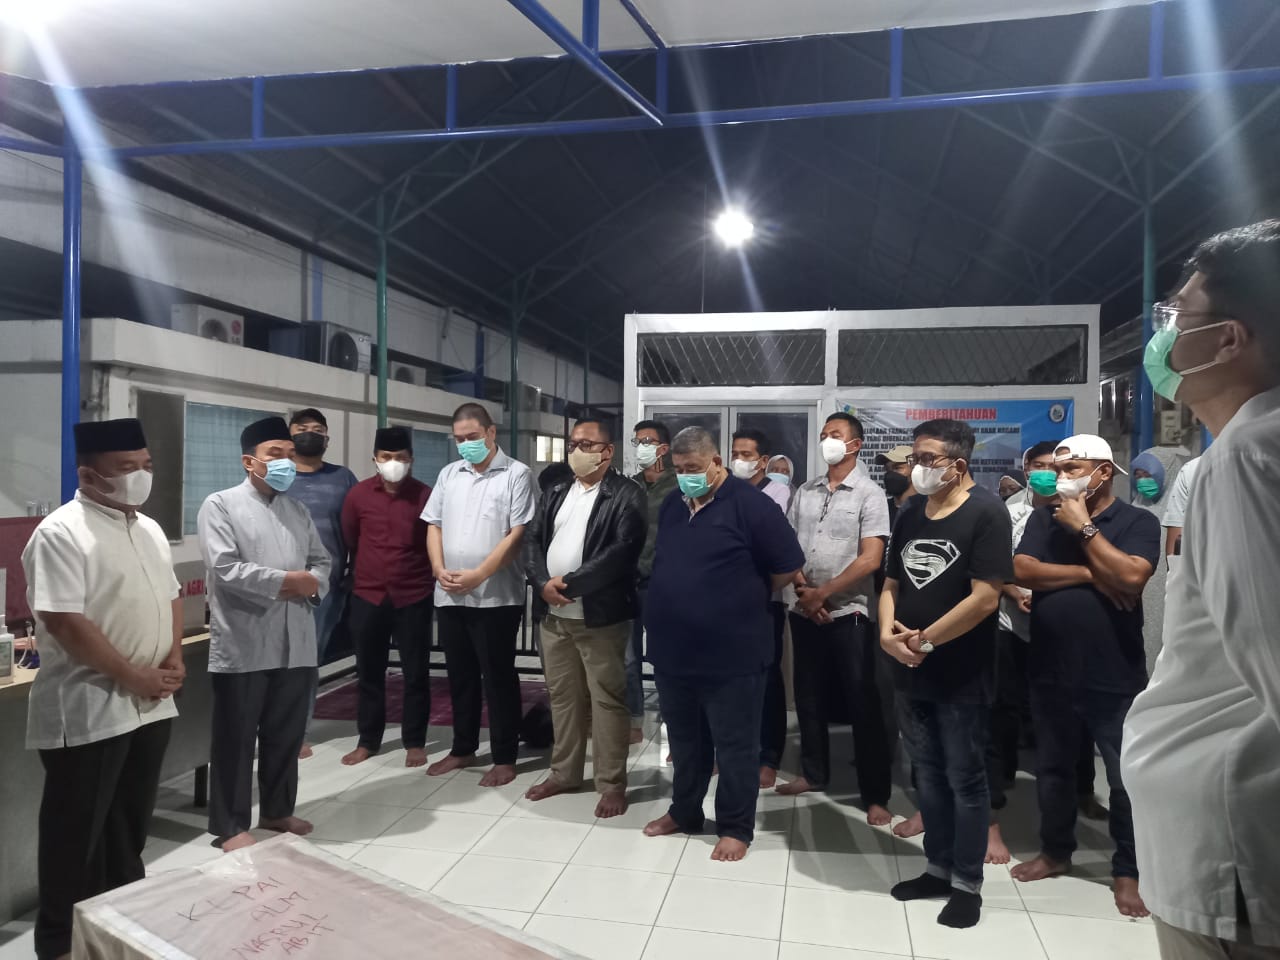 Prosesi pelepasan jenazah Tokoh Sumatera Barat, Nasrul Abit di RSUP M. Djamil Padang untuk dimakamkan ke pemakaman keluarga di Labuhan Tanjak Air Haji, Kecamatan Sari Linggo Baganti, Kabupaten Pesisir Selatan.